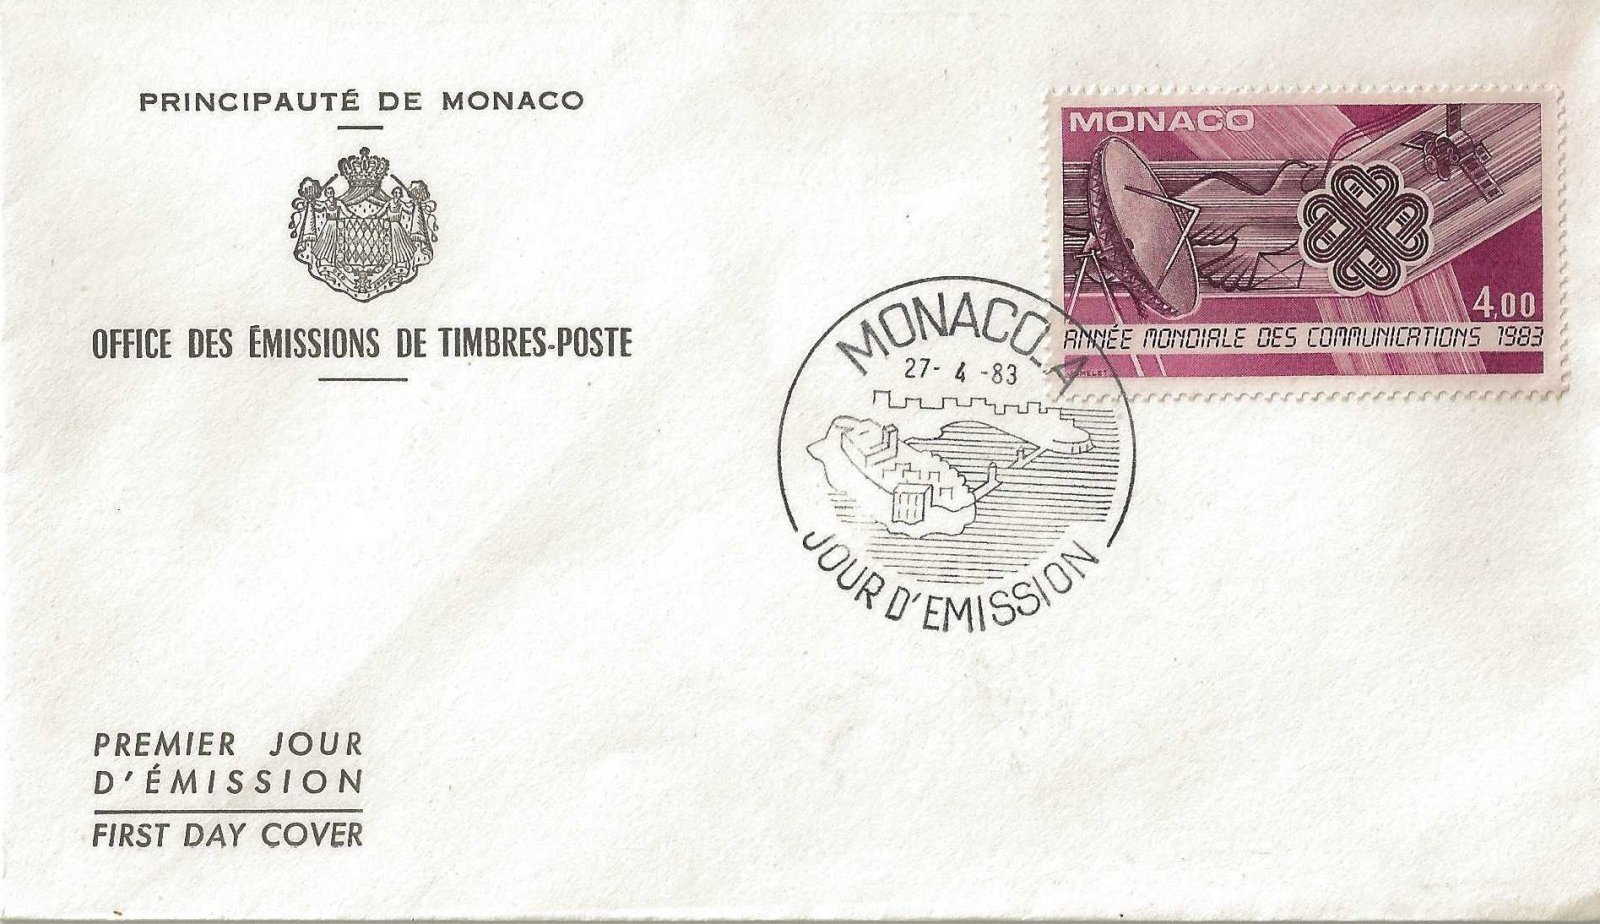 1983 journee communications monaco